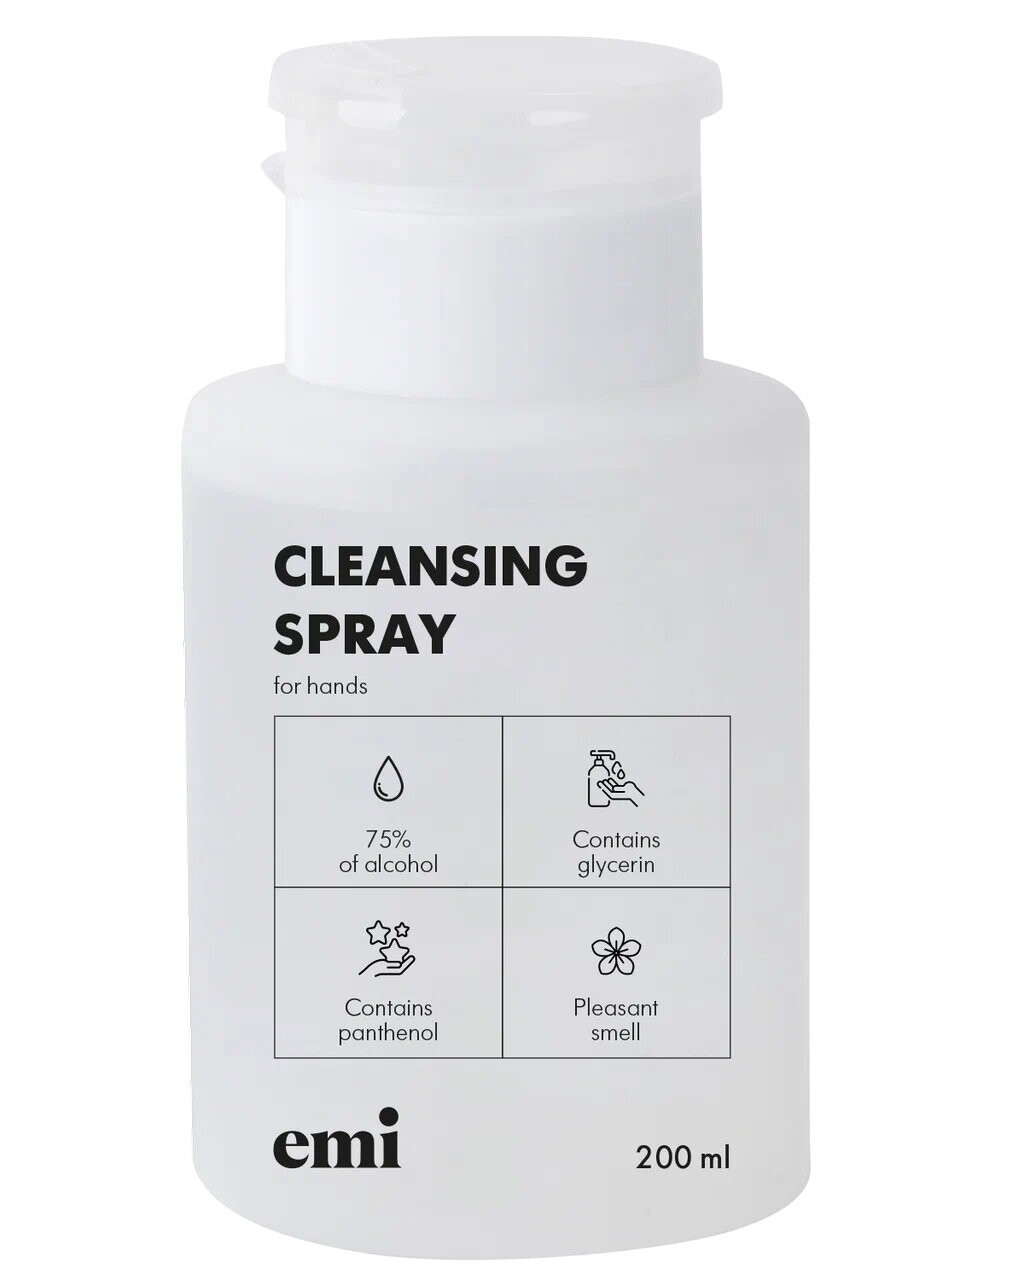 Cleansing spray